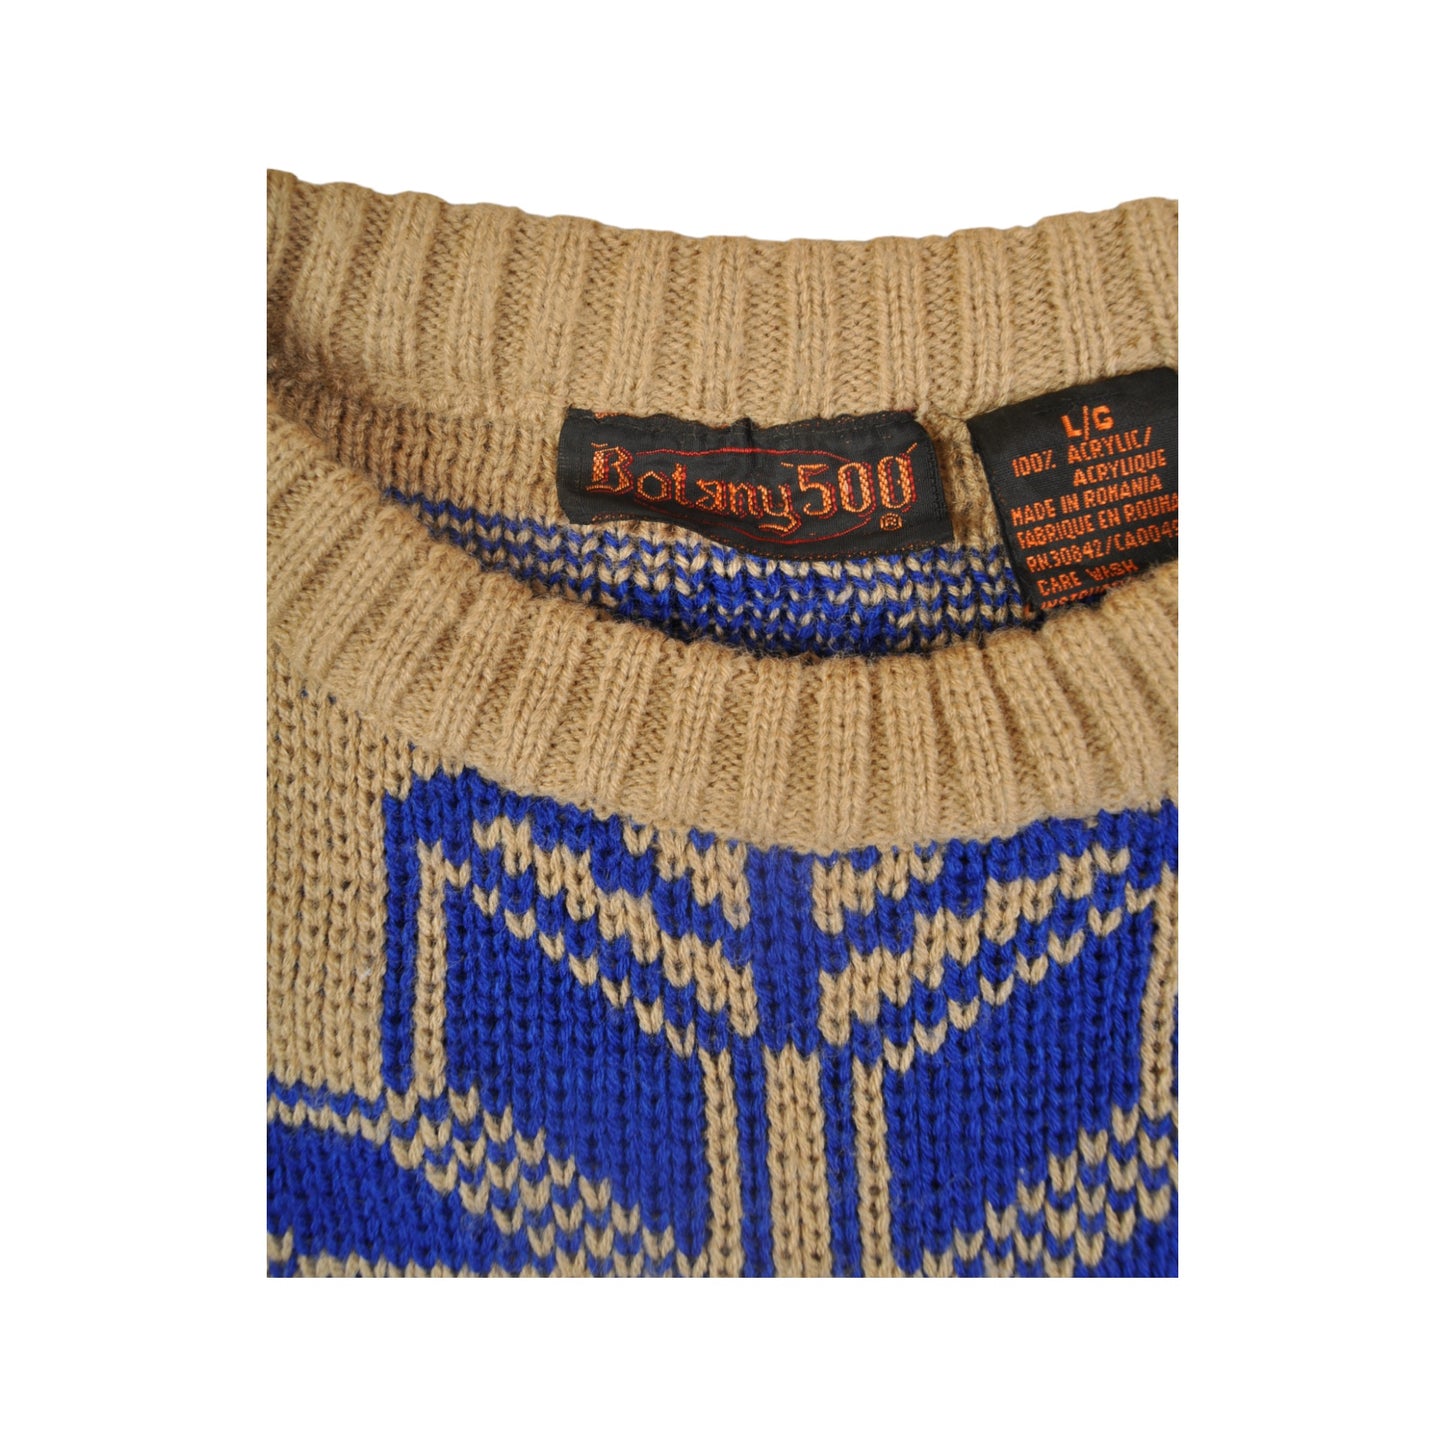 Vintage Knitted Jumper Retro Pattern Tan/Blue Large